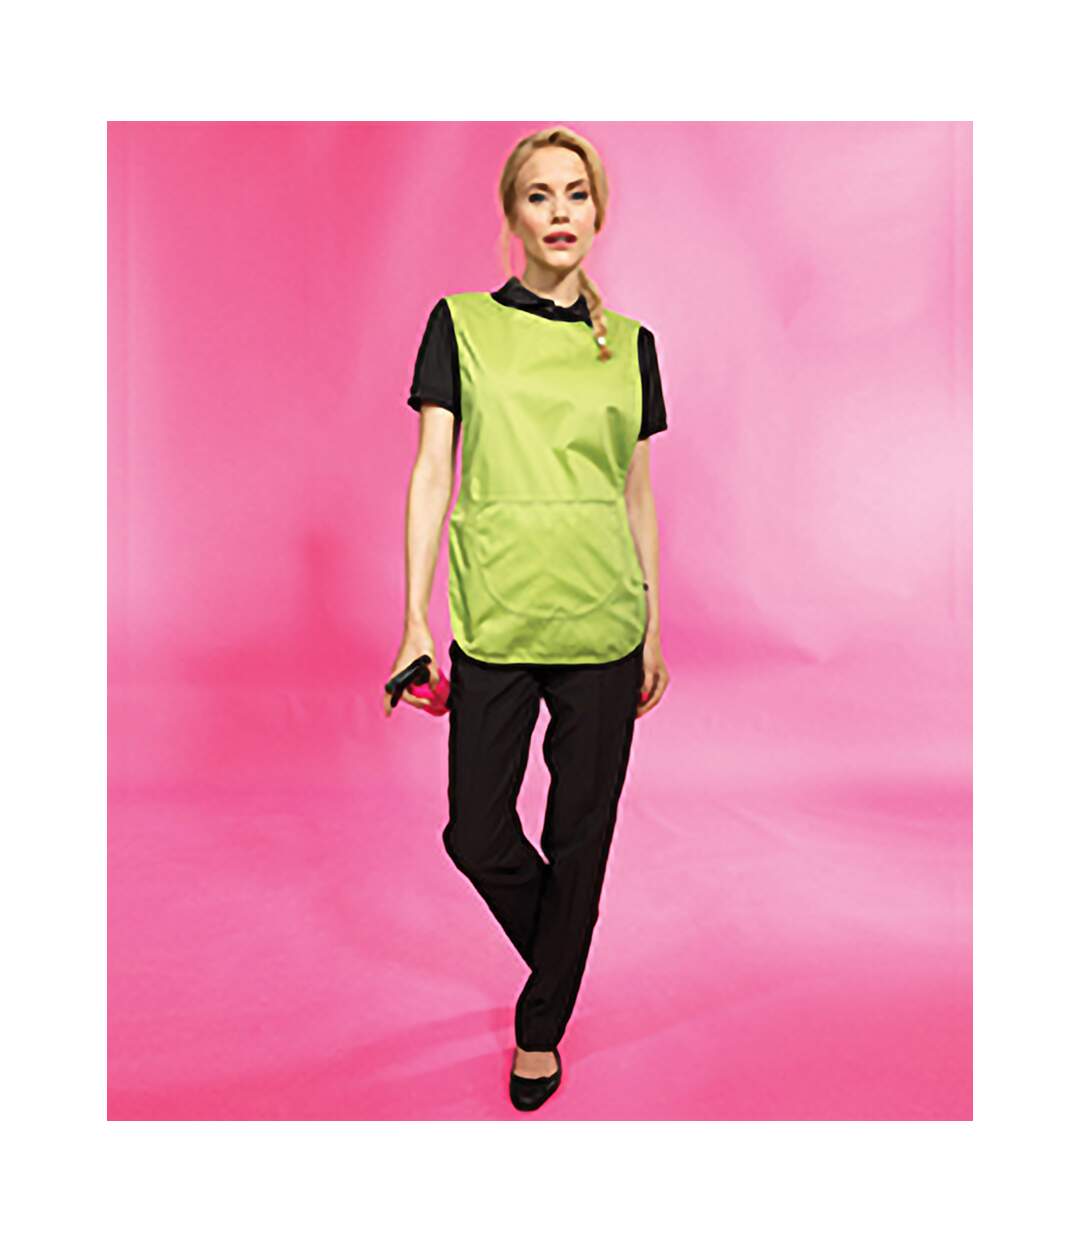 Premier Ladies/Womens Pocket Tabard/Workwear (Lime) (XL)